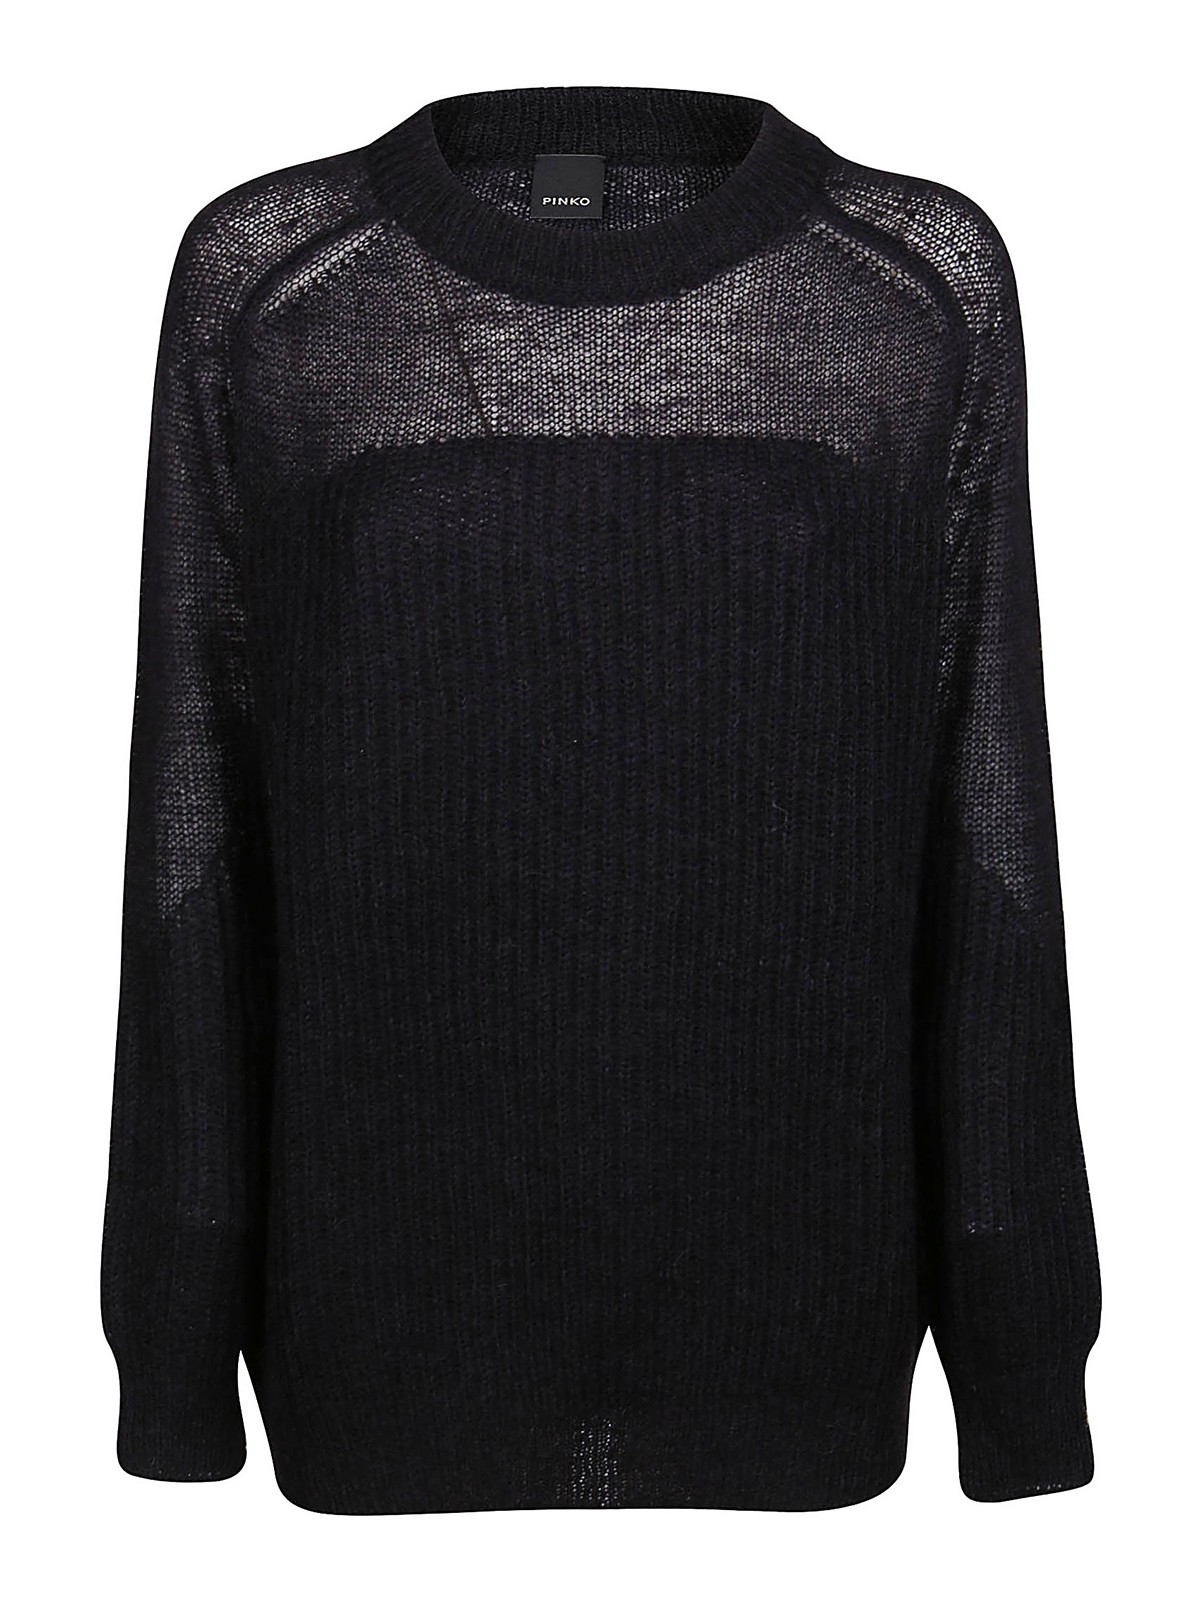 Crew necks Pinko - Togo sweater - 1G156VY6E2Z99 | Shop online at iKRIX